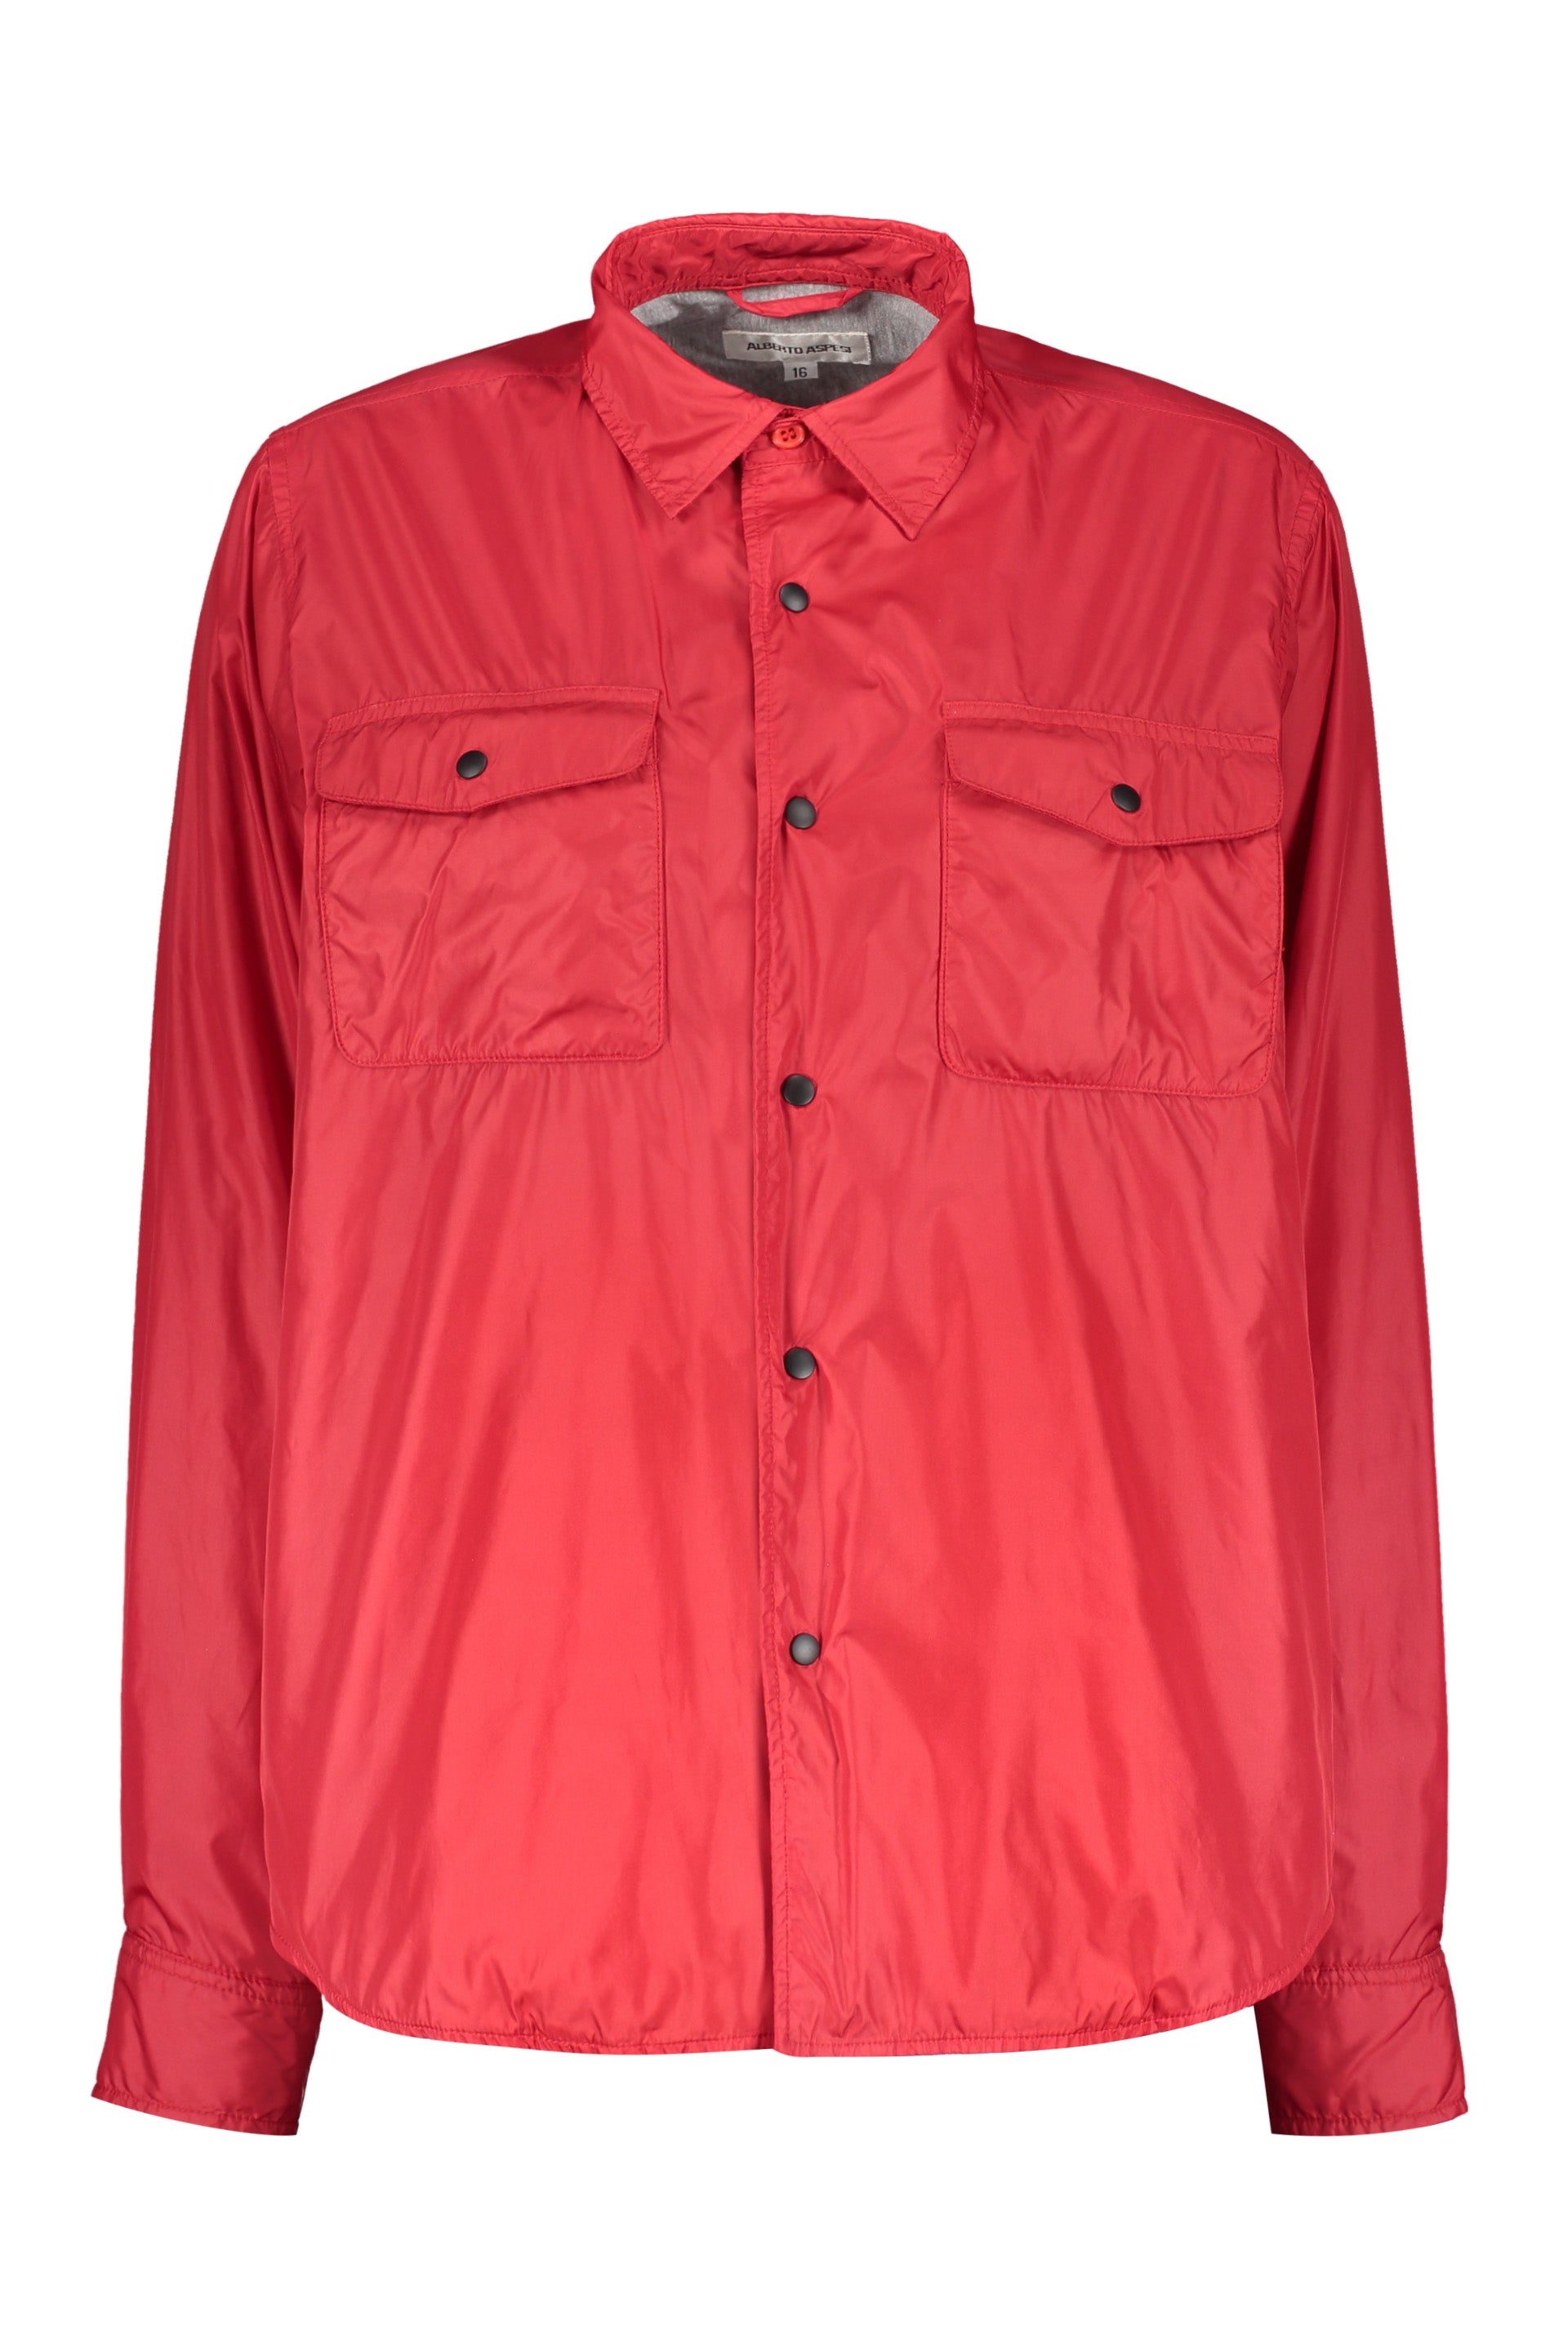 Aspesi-OUTLET-SALE-Techno-fabric-jacket-Jacken-Mantel-16-ARCHIVE-COLLECTION.jpg